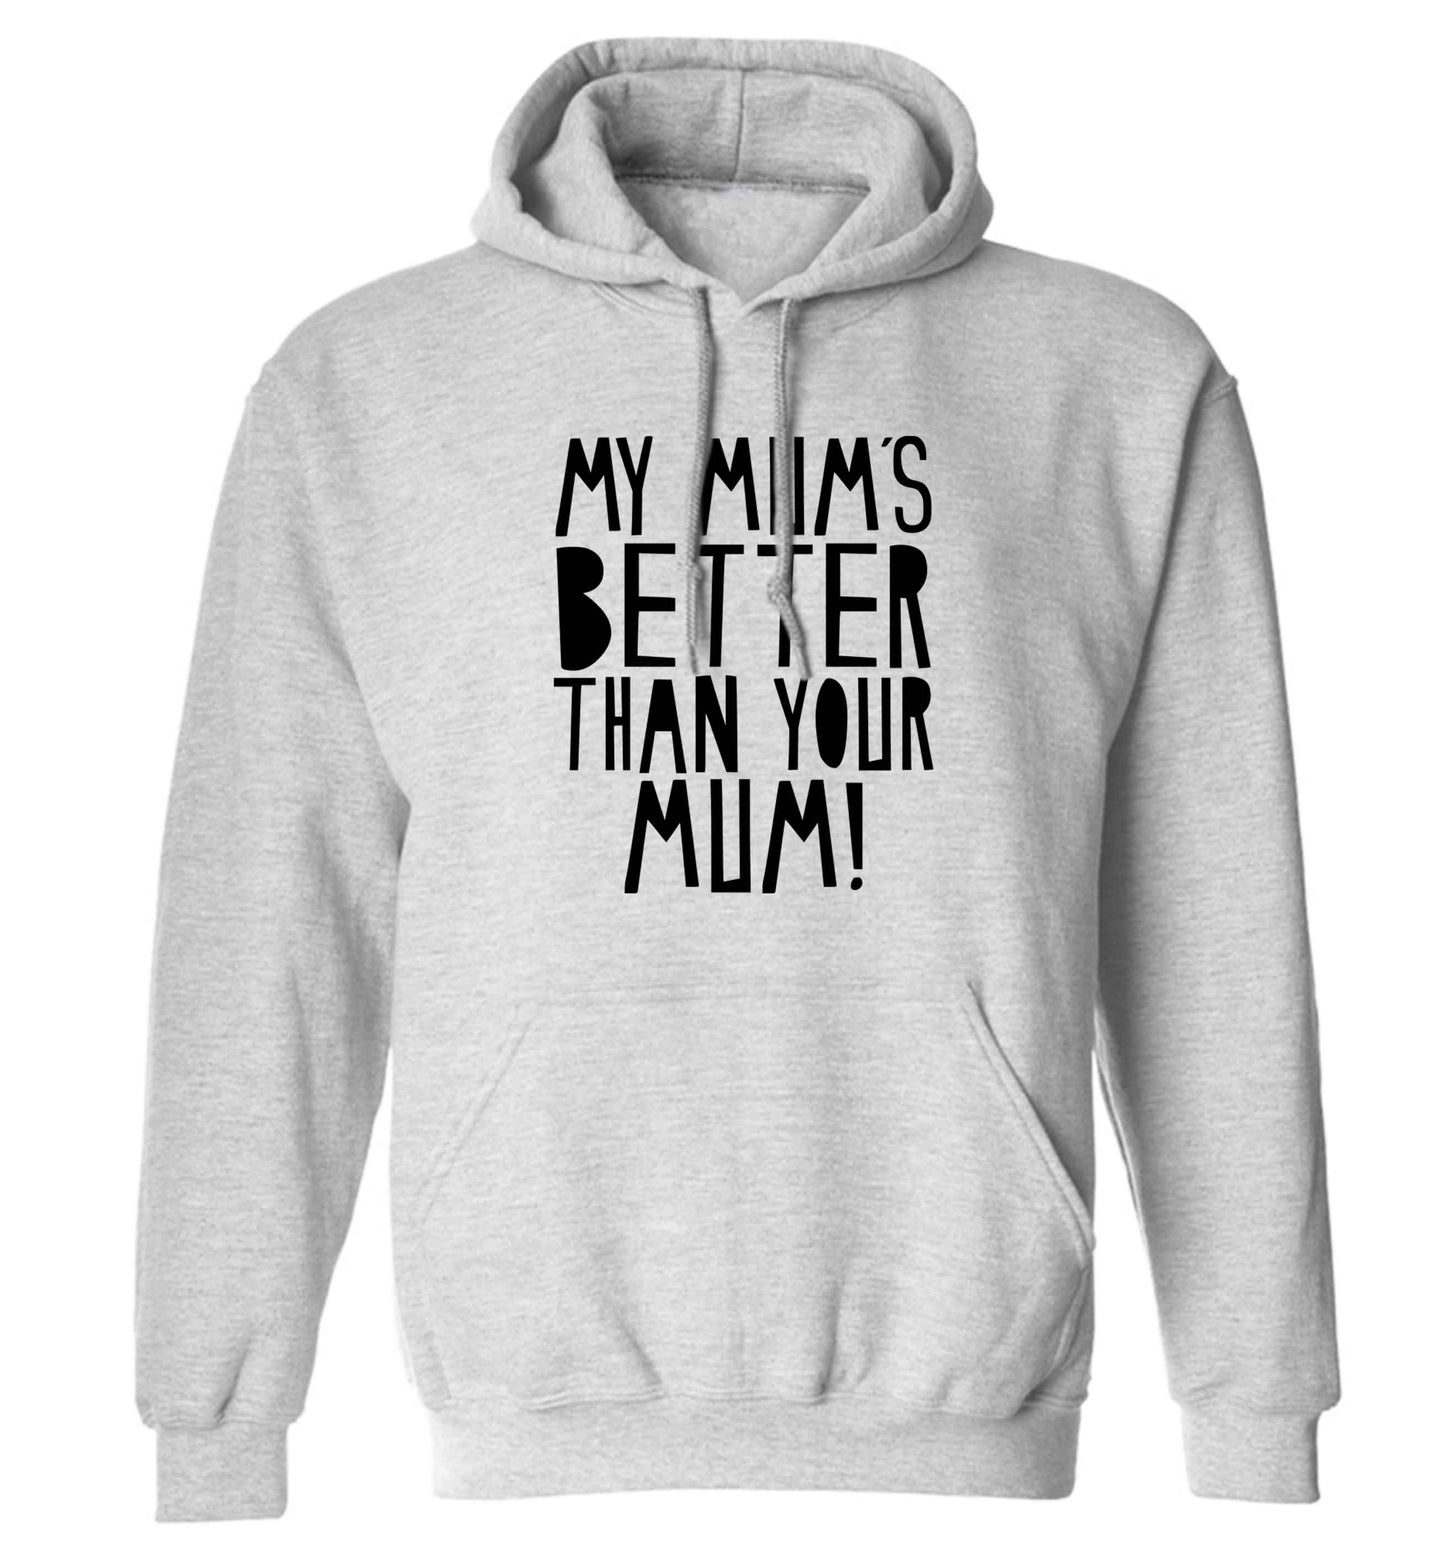 My mum's better than your mum adults unisex grey hoodie 2XL